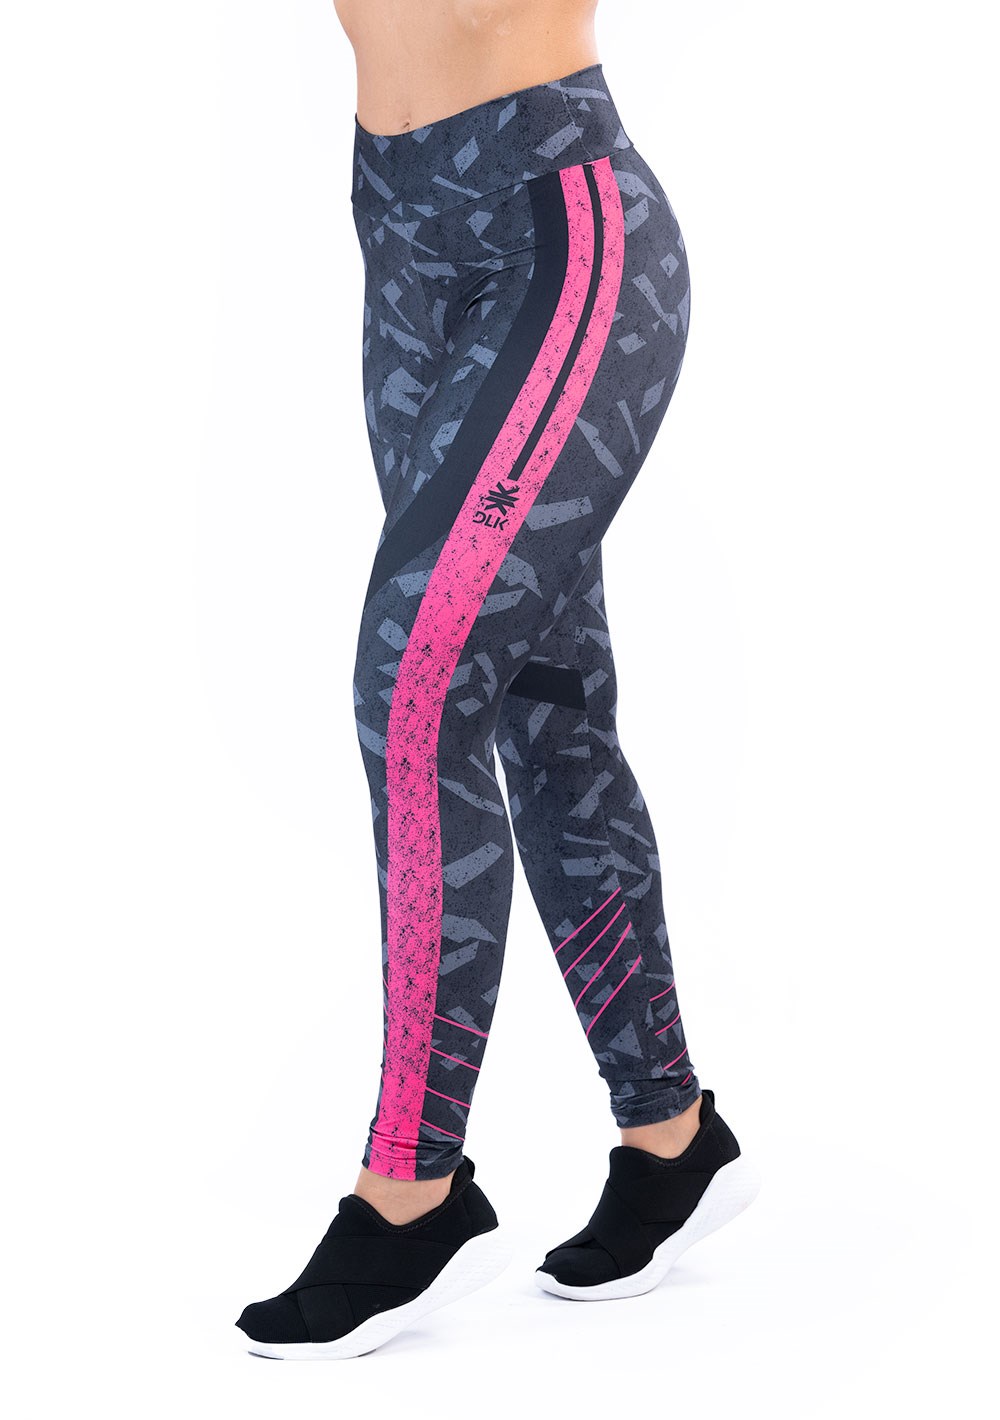 Legging fitness feminina new printed estampada abstrato pink